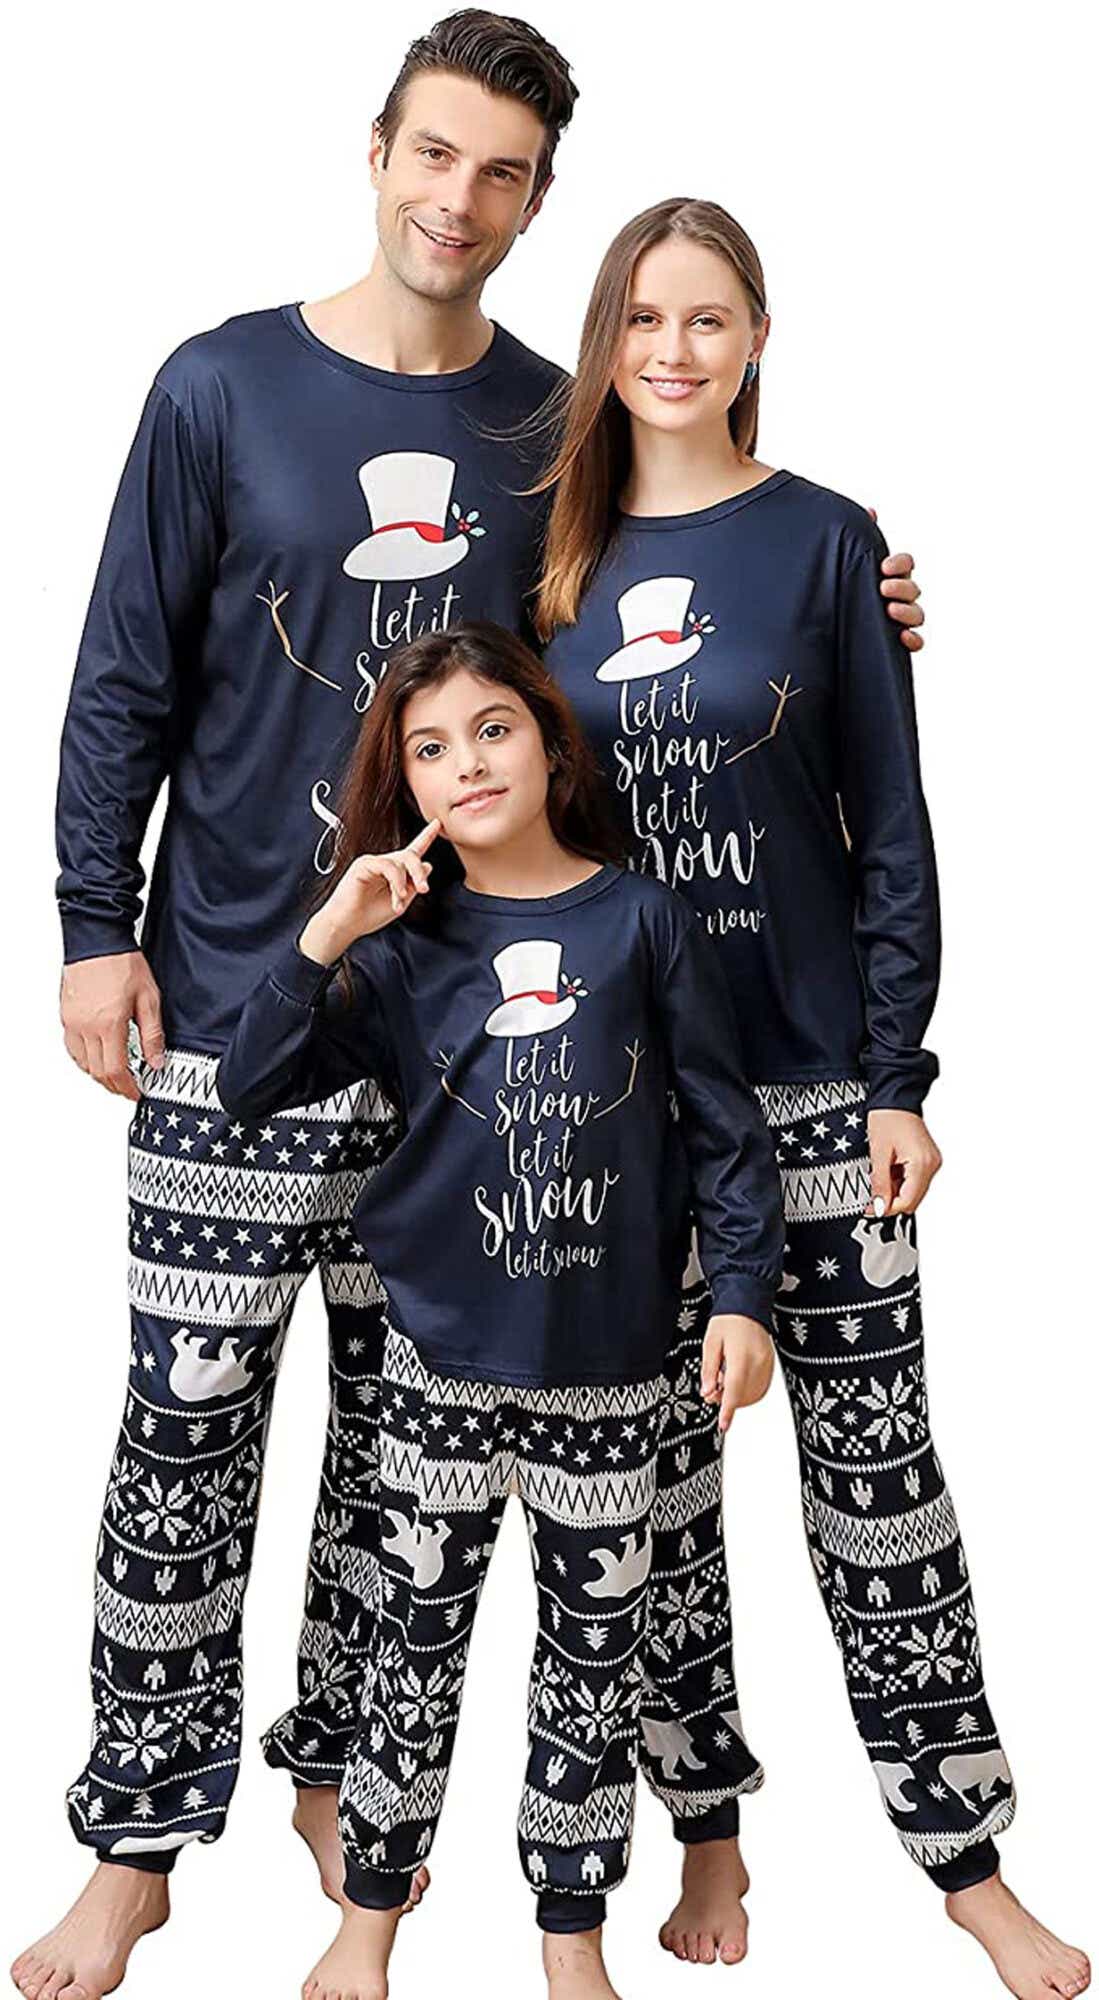 Kleding Dameskleding Pyjamas & Badjassen Sets 2022 Family Matching Christmas Pjamas Couples Matching Sleepwear Christmas Pajamas Outfit 